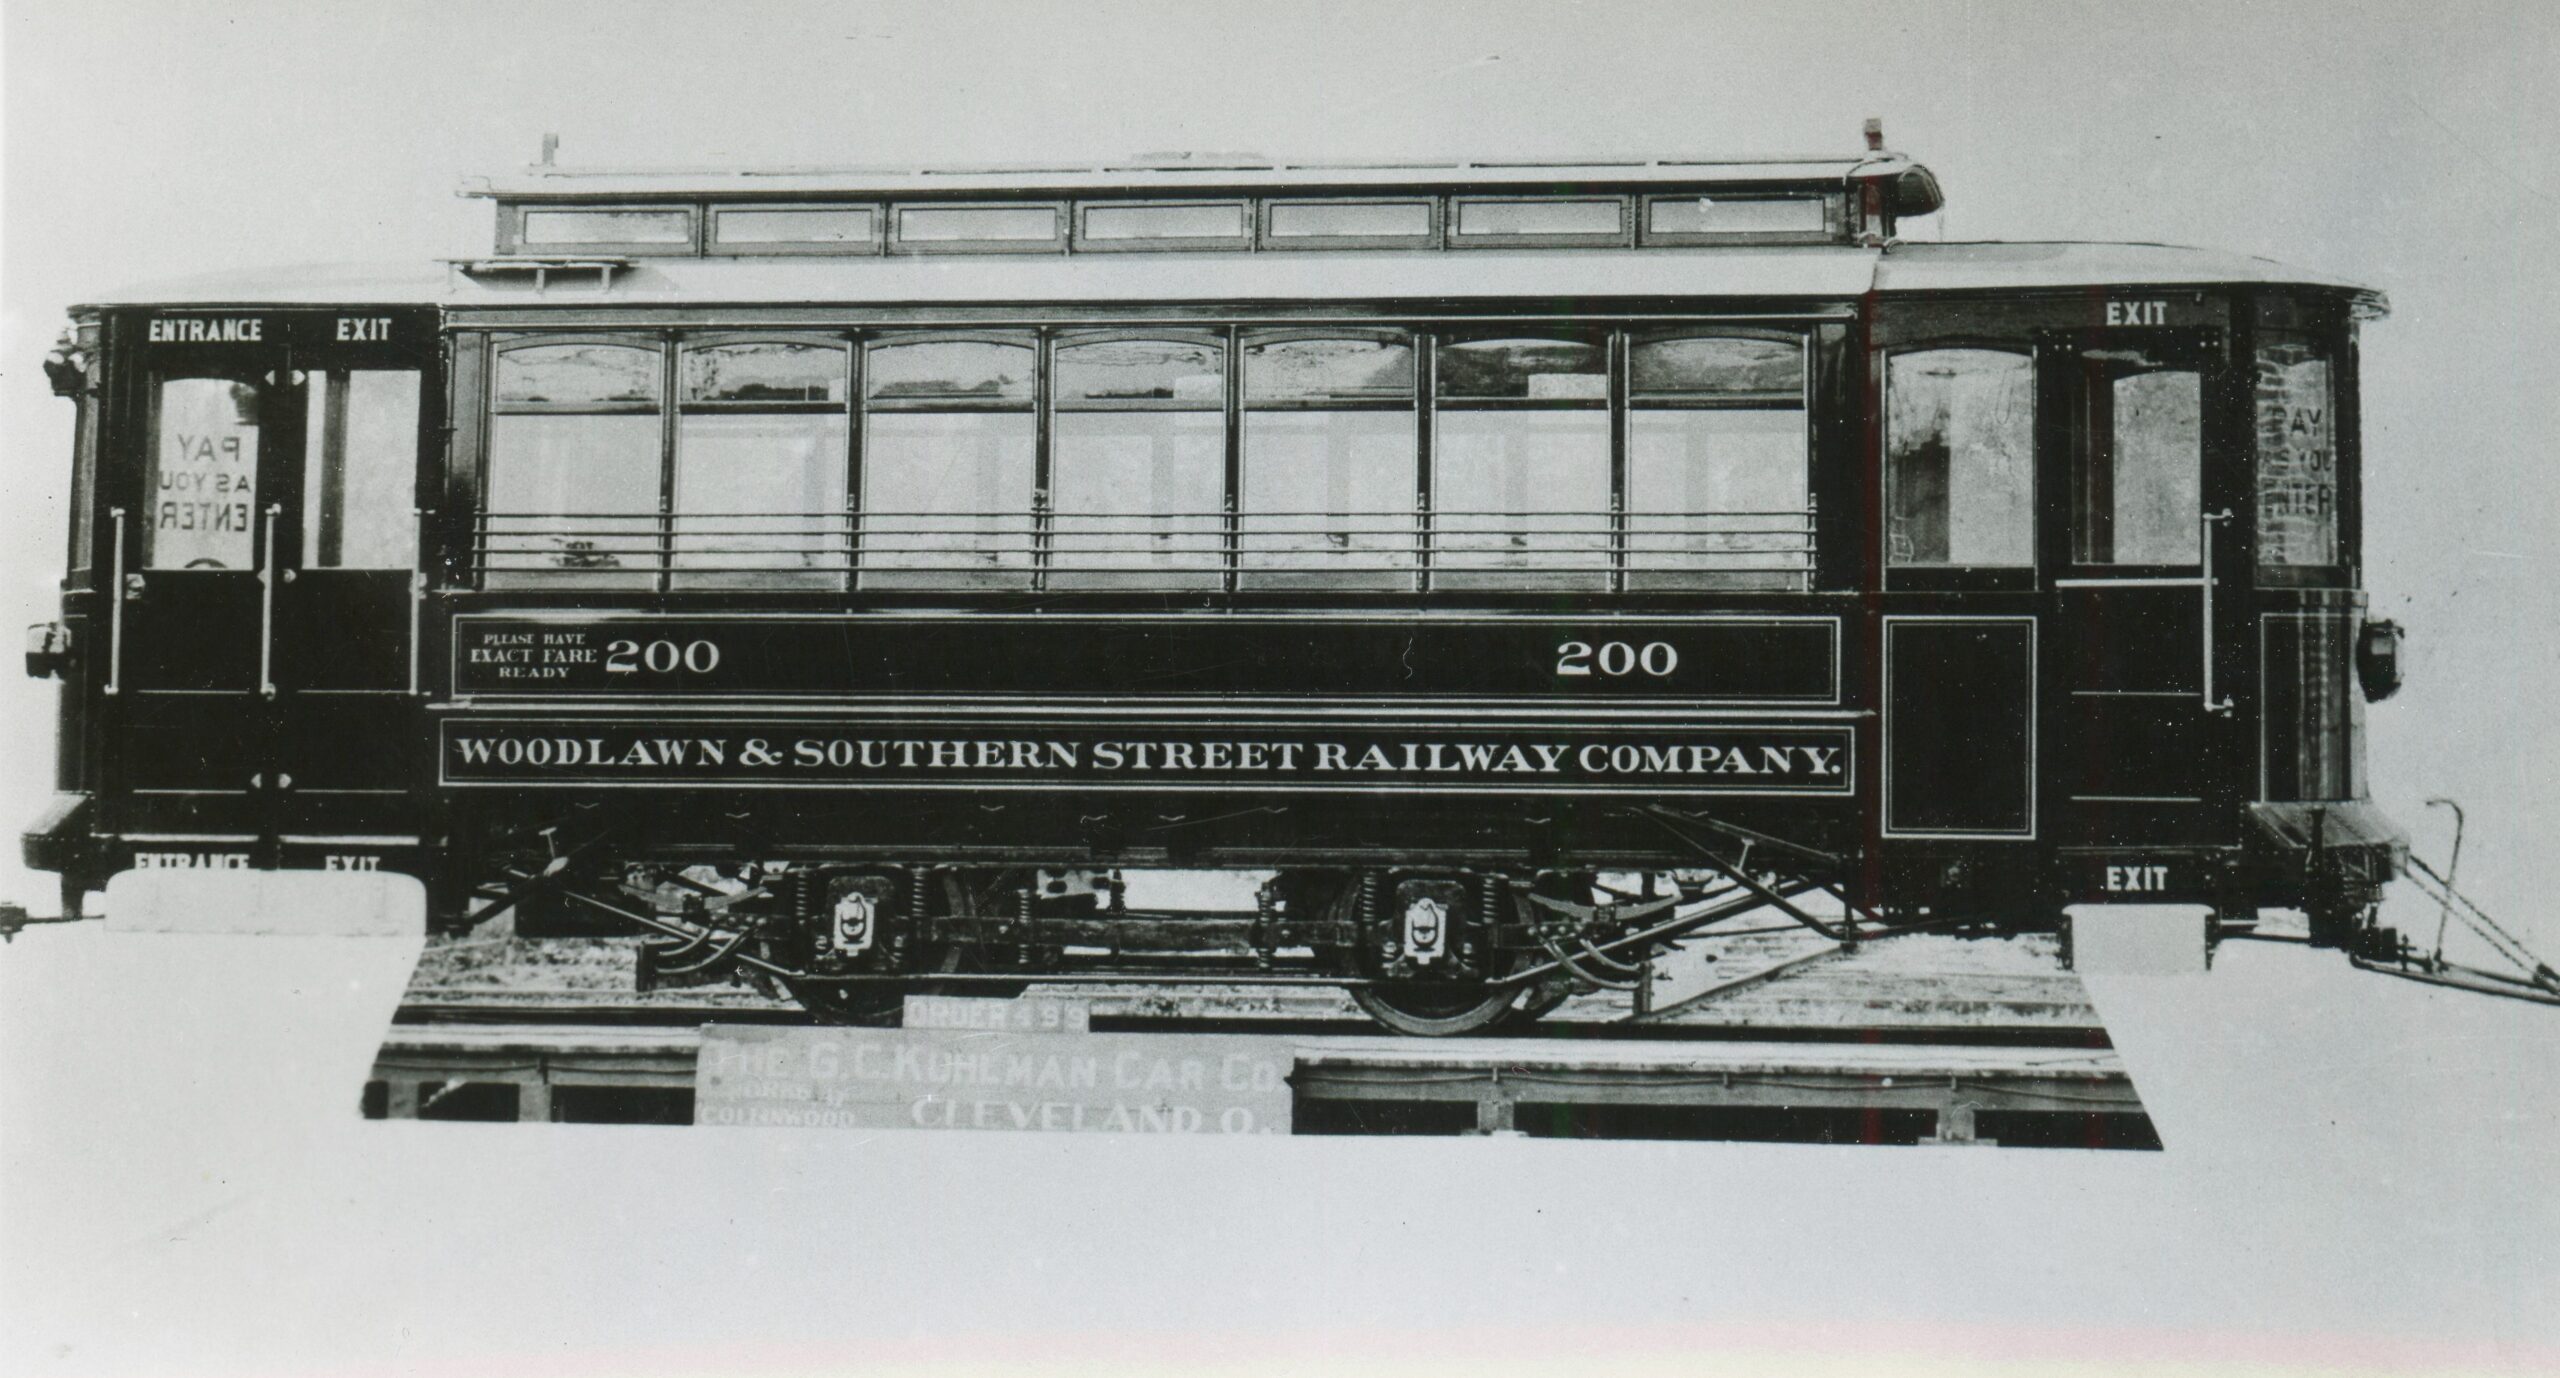 Woodlawn and Southern Street Railway Company | Cleveland, Ohio | Car 200 | 1911 | G C Kuhlman Car Company